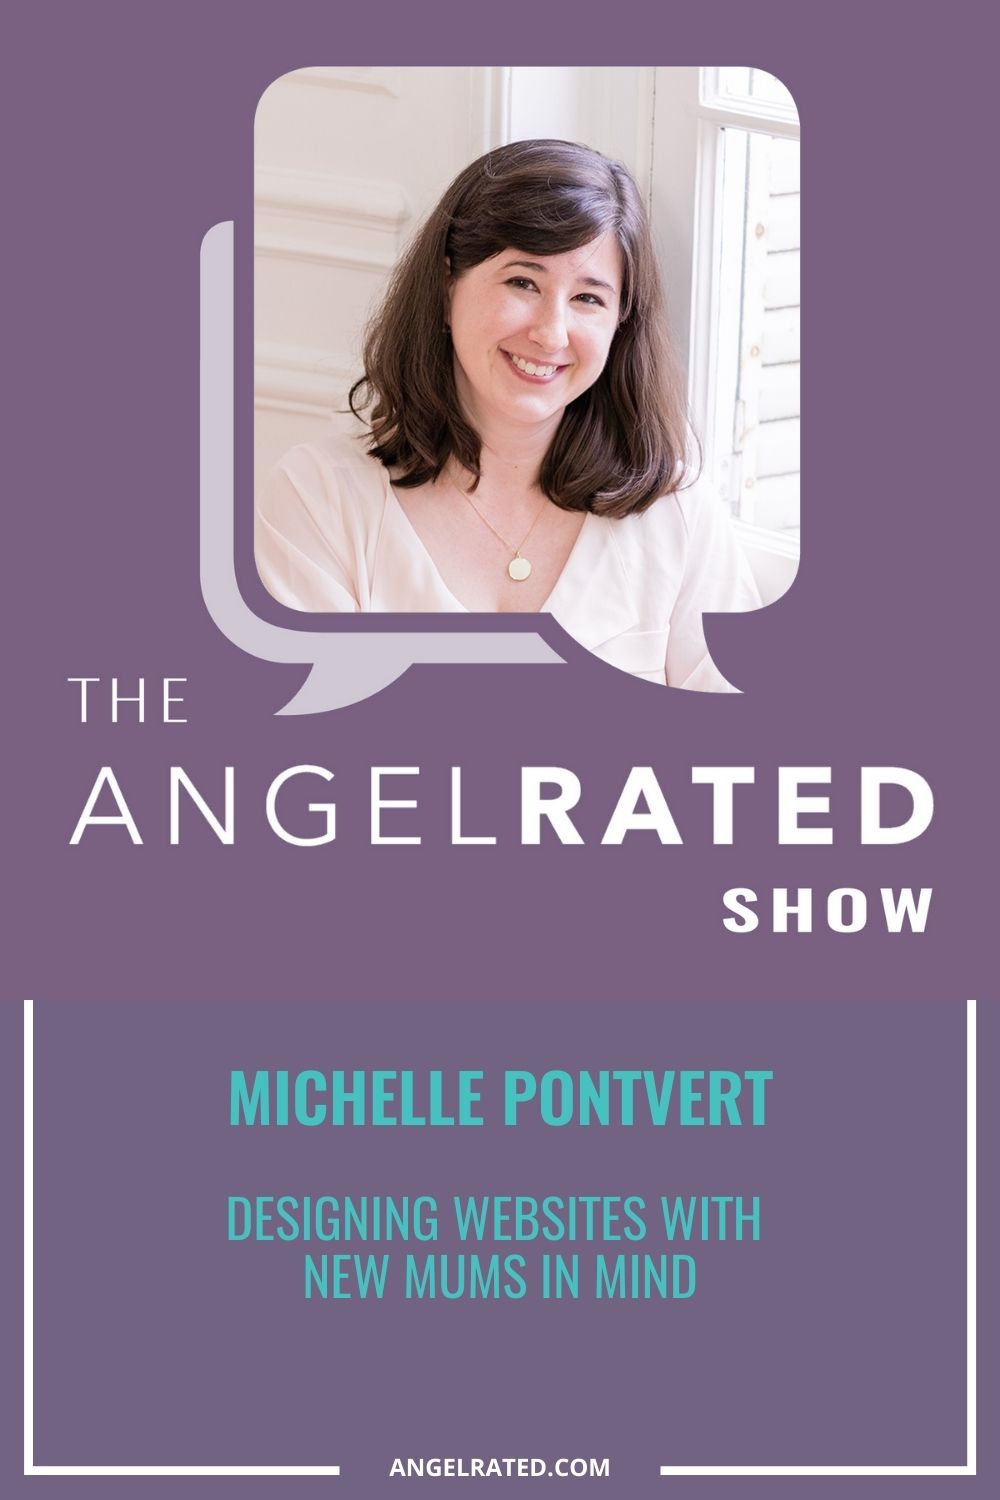 Michelle Pontvert: Designing websites with new mums in mind